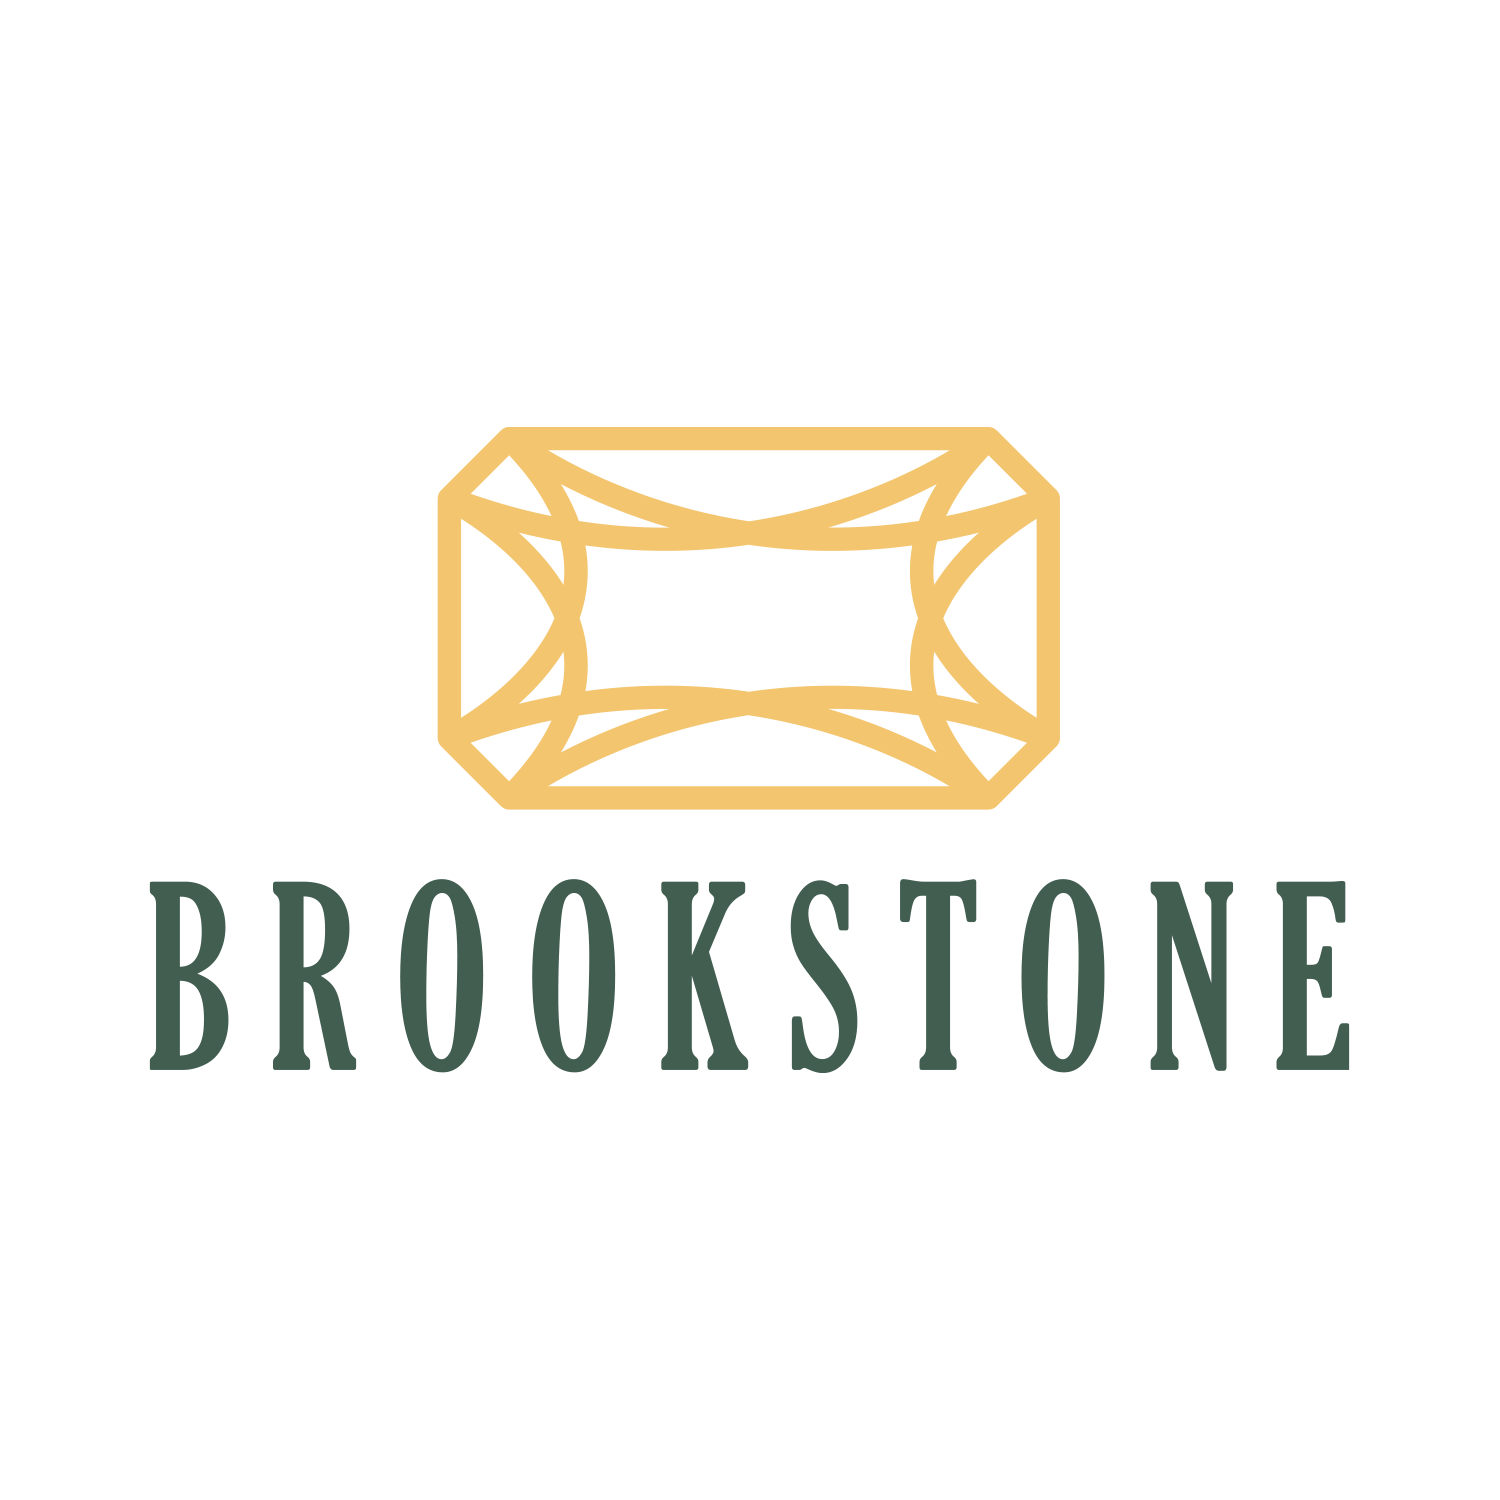 Brookstone Townhomes Logo Design - Milliken, CO Townhomes